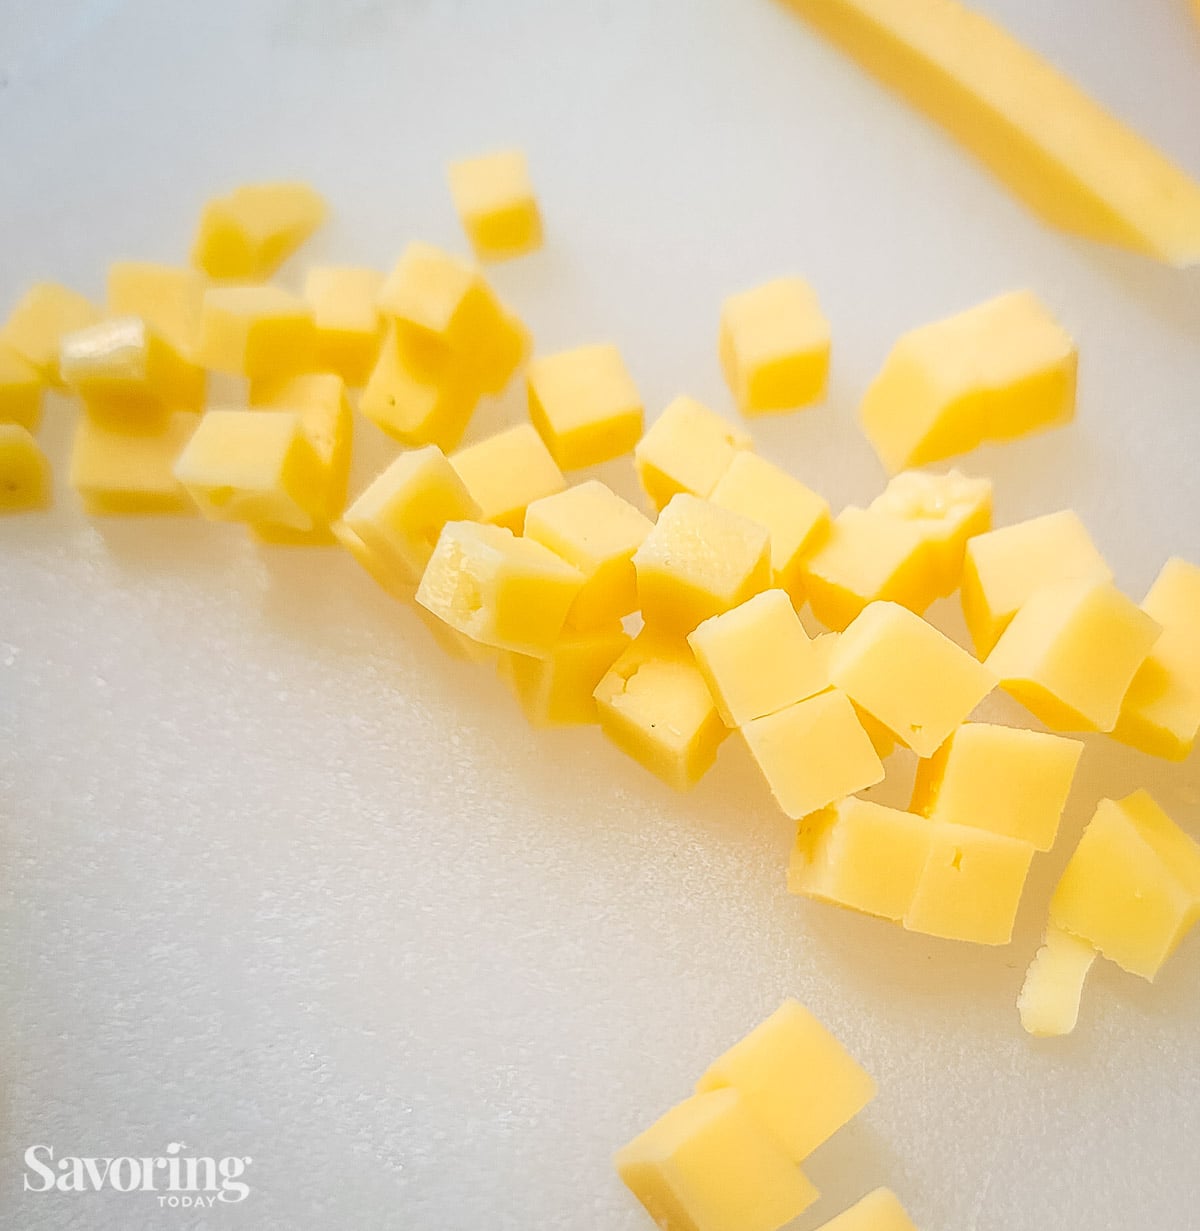 cubed gouda cheese on a cutting board